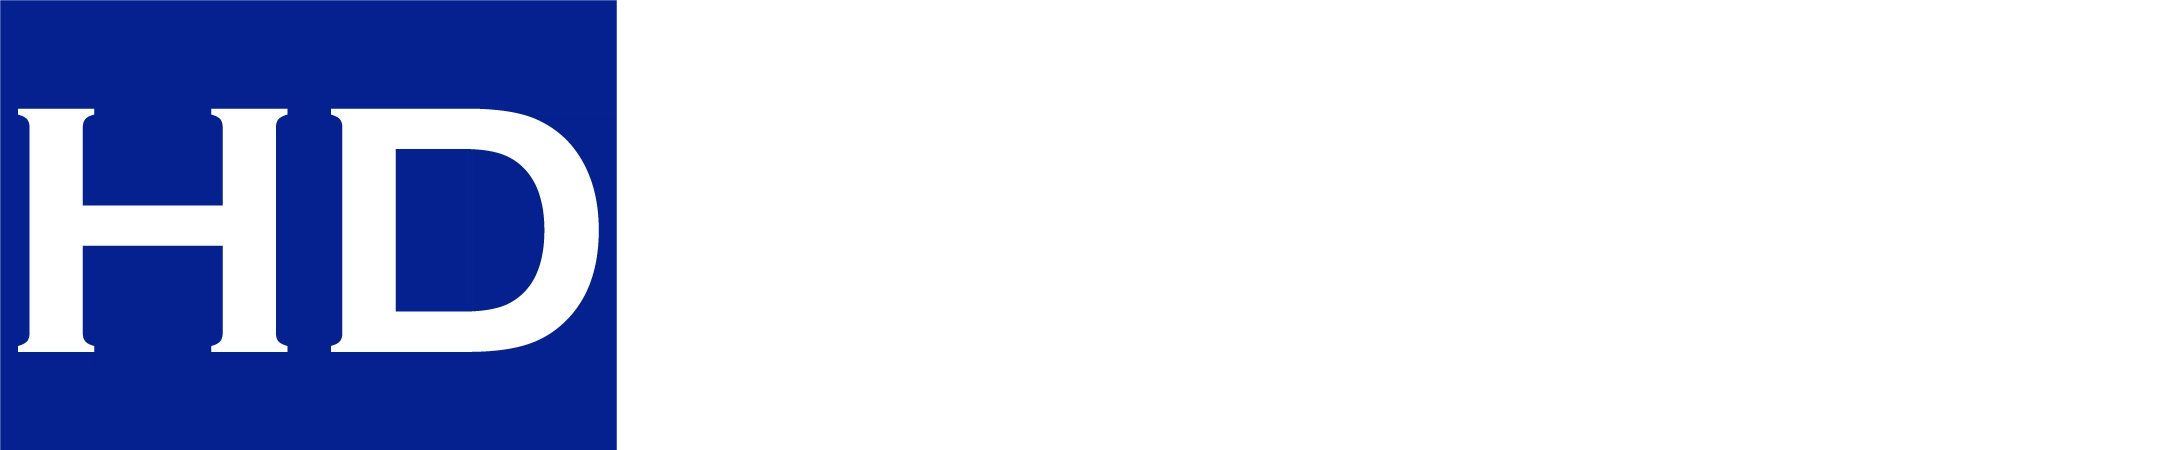 HD Roofs, Inc Logo